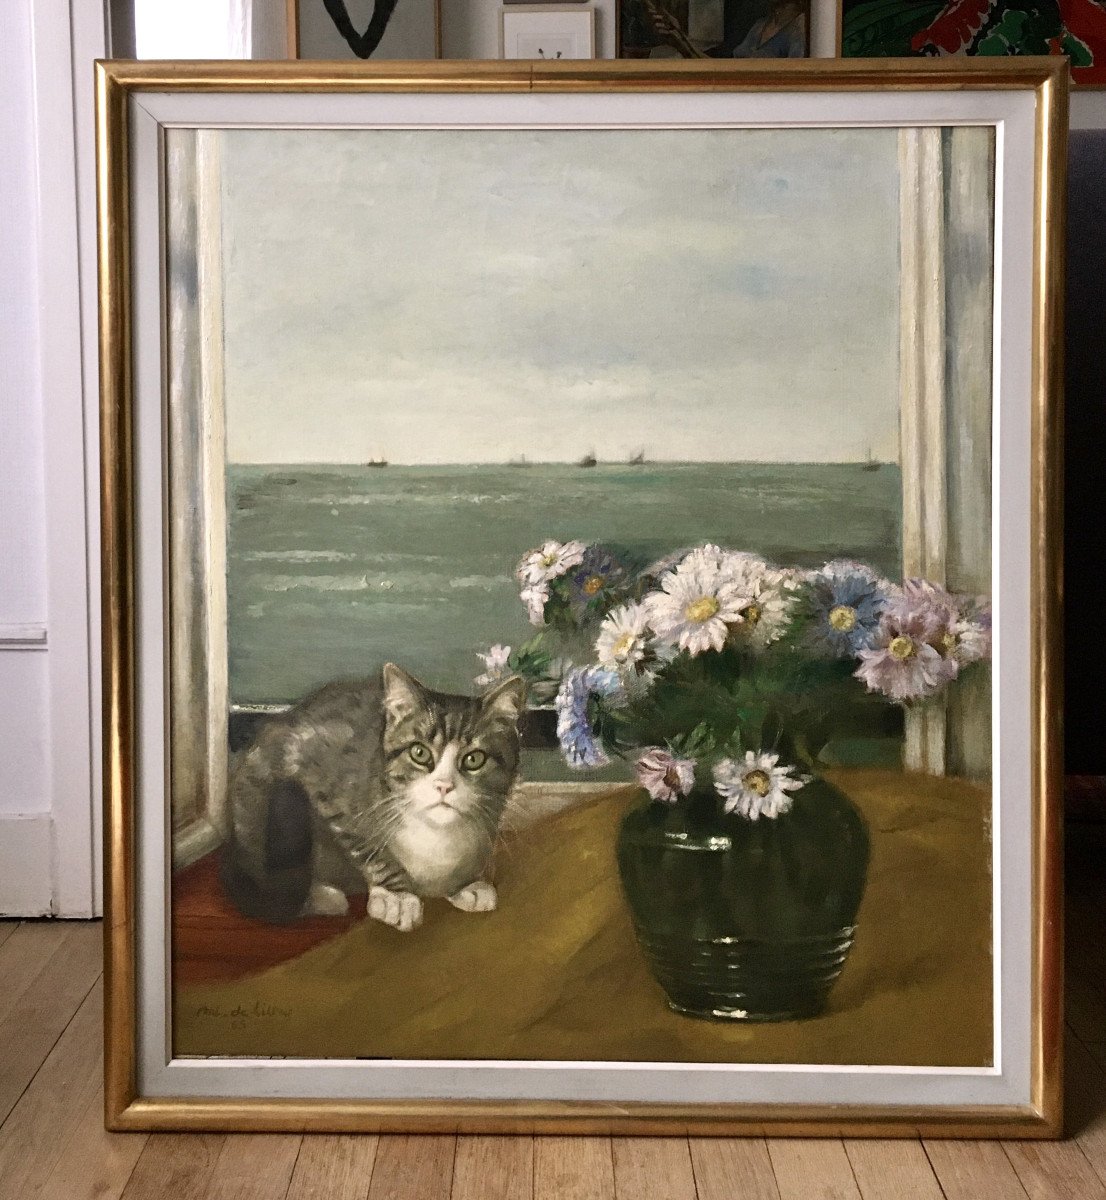 Antoinette De Littry (1905, France-1998). “cat In Front Of The Window”. 1965.